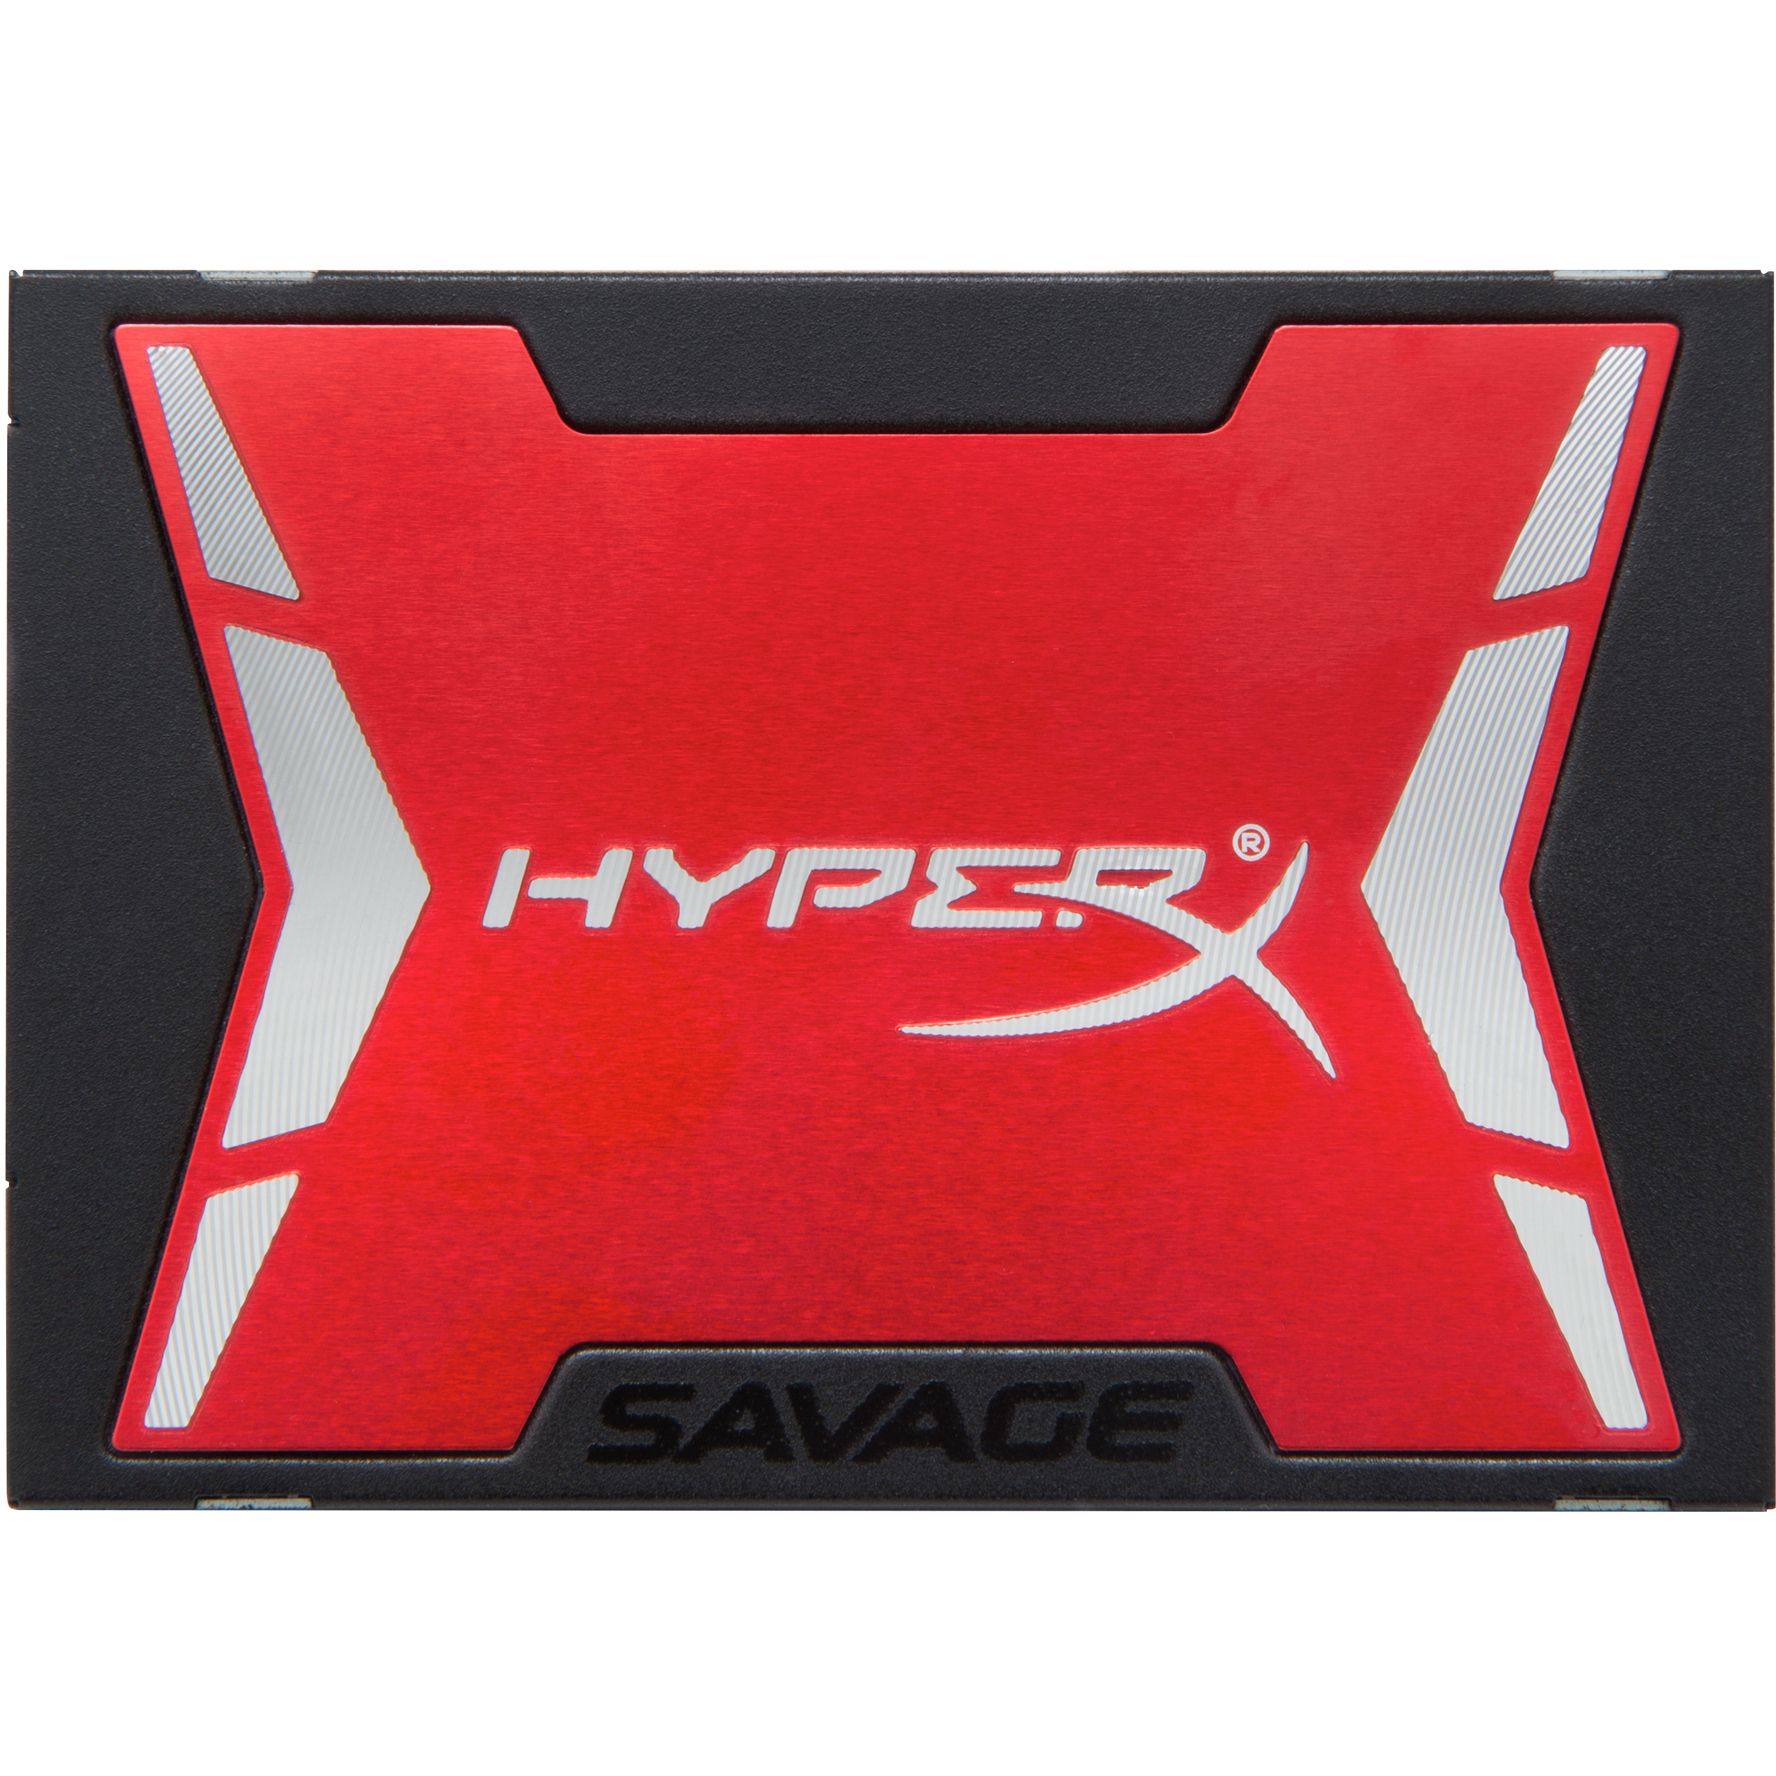  SSD Kingston HyperX SAVAGE, 240GB, 2.5", SATA III 